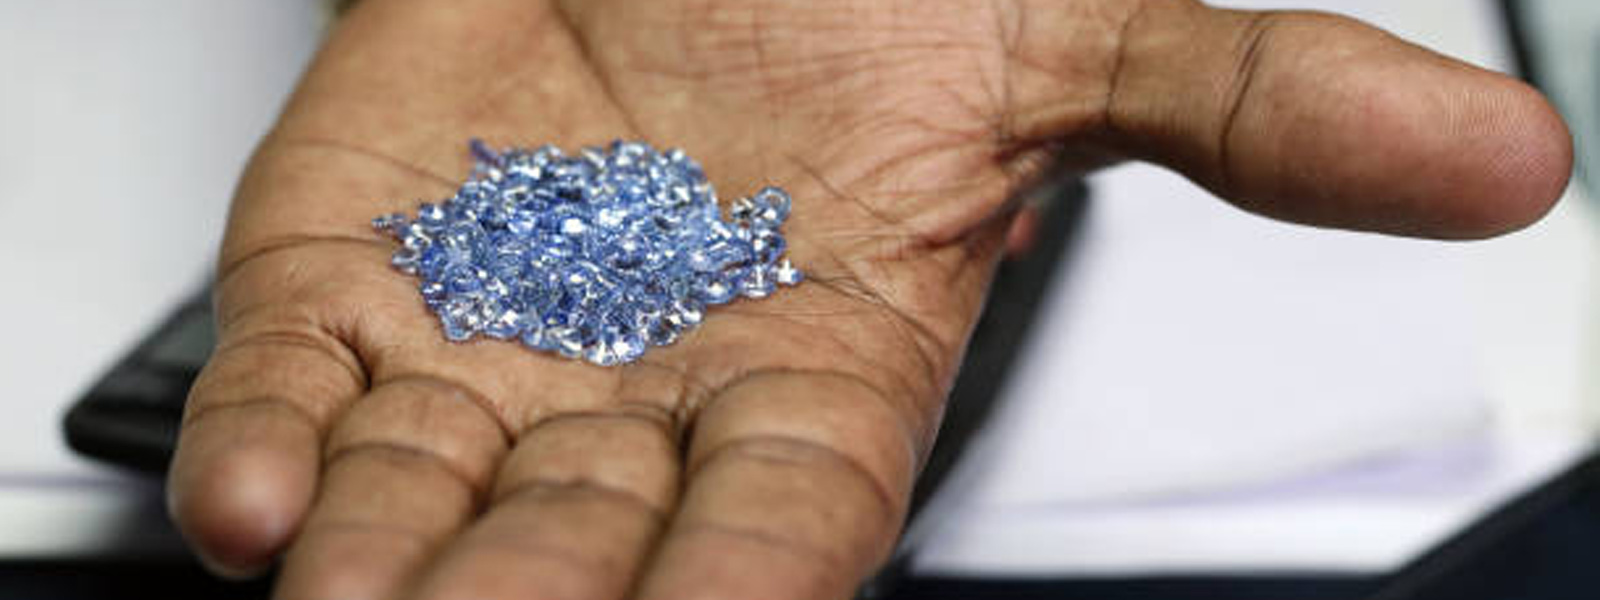 18 illegal gem miners taken into police custody 